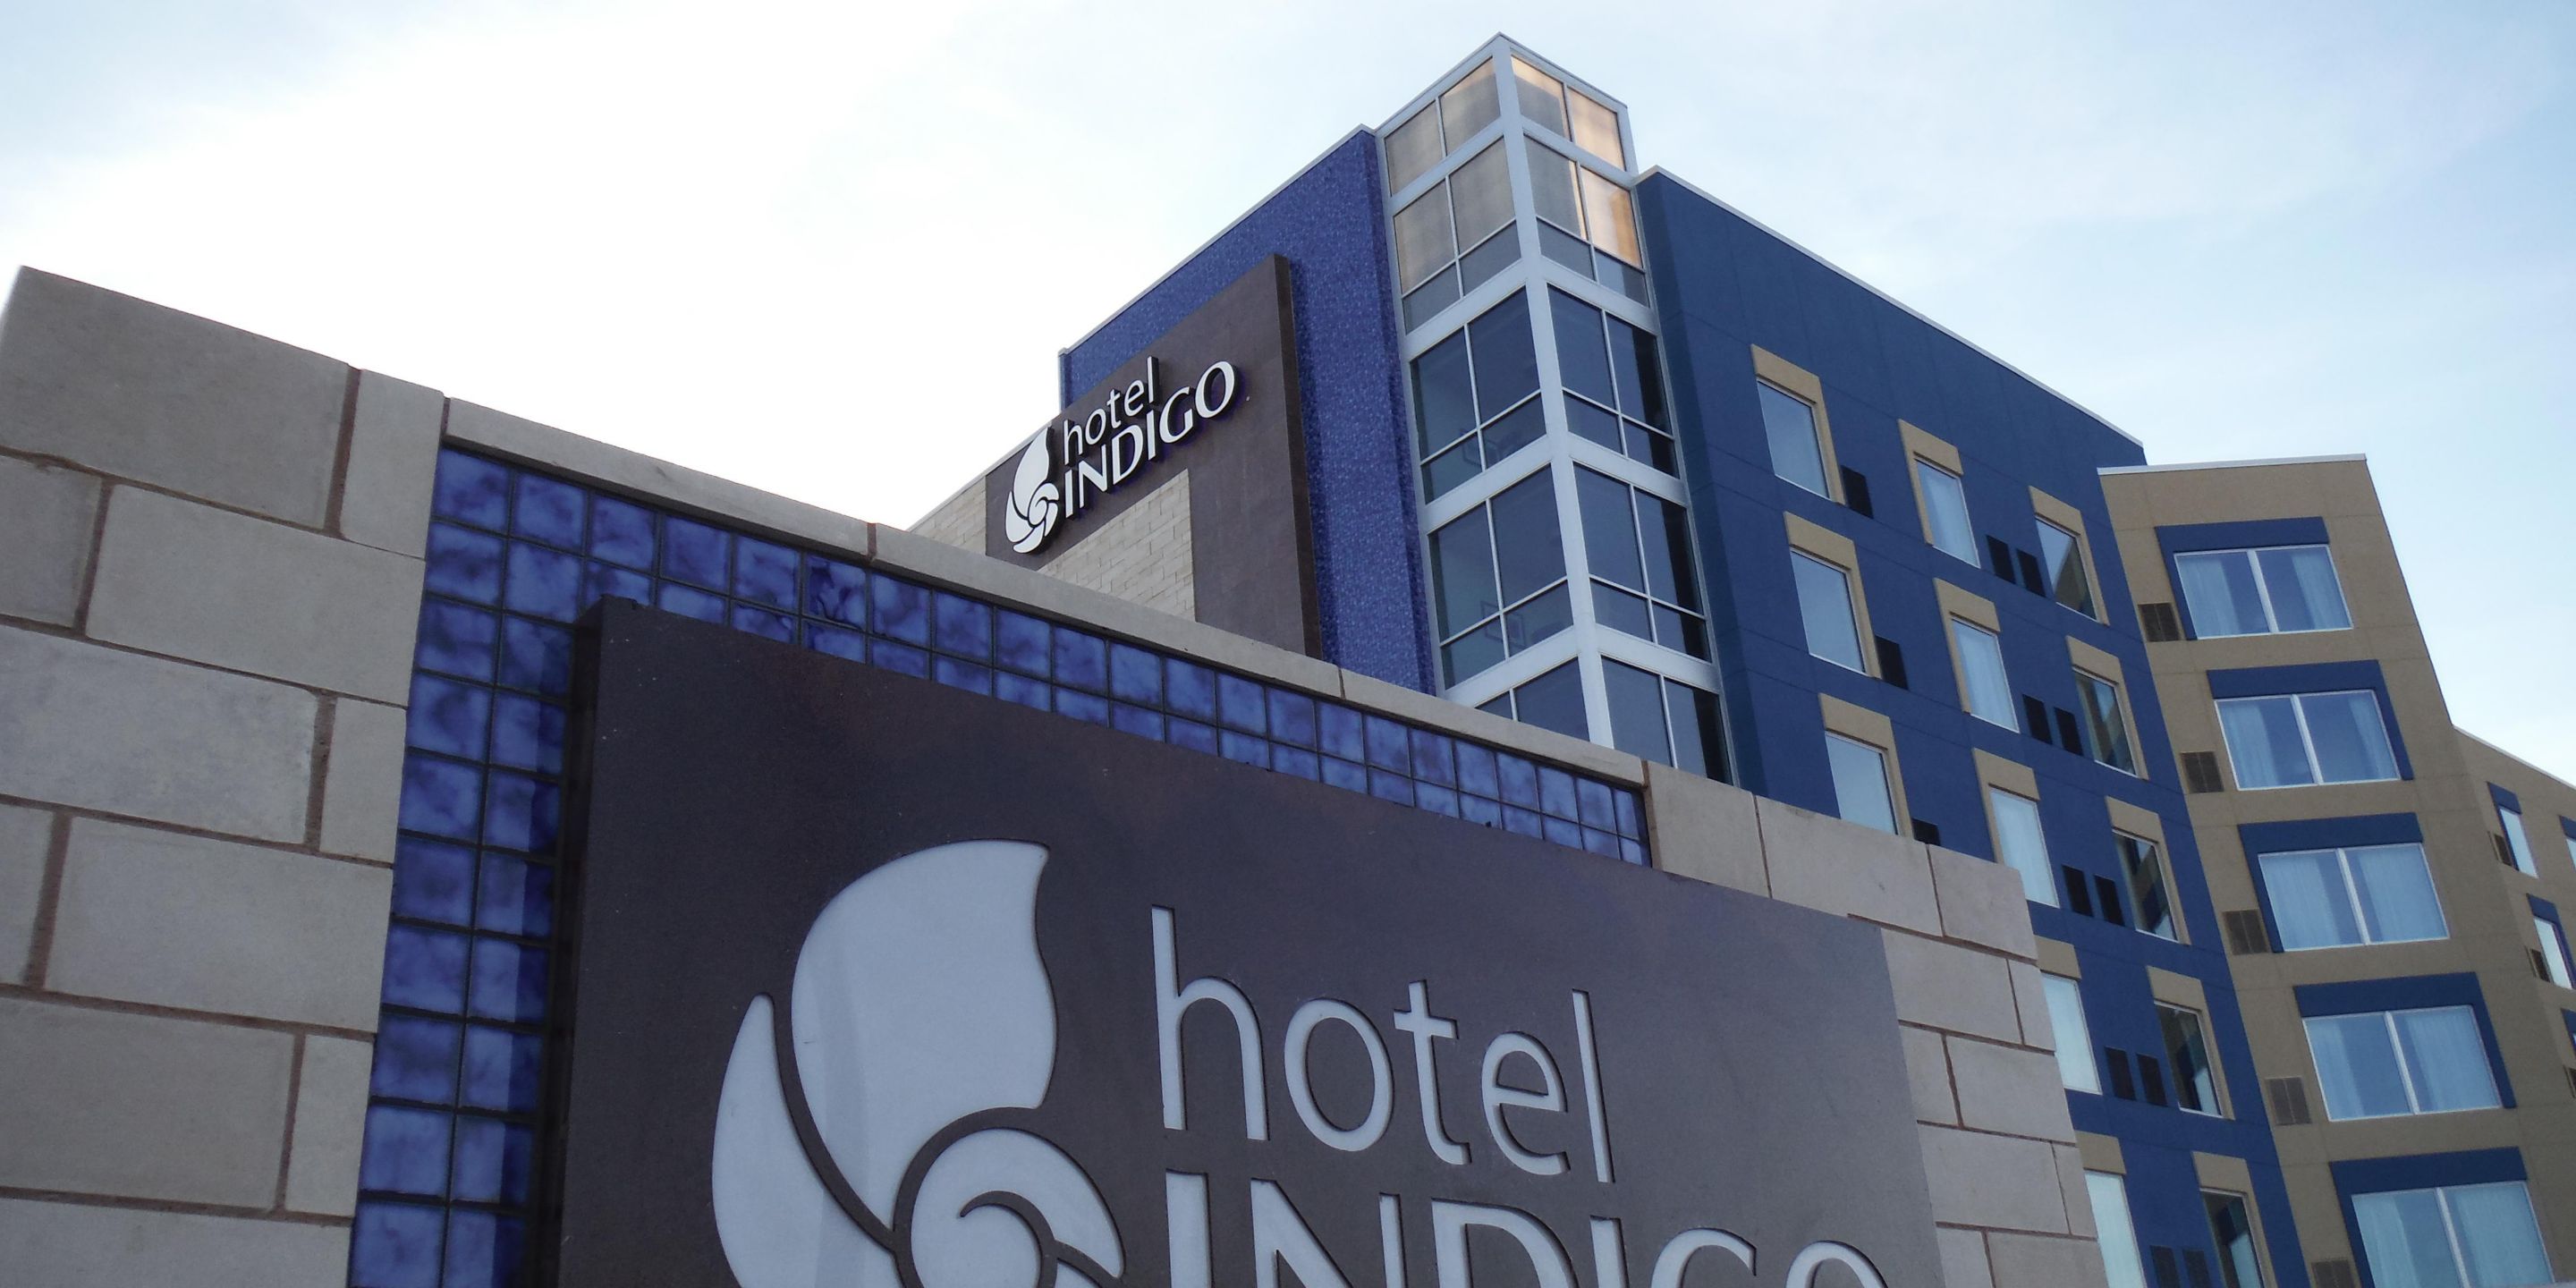 4 star indigo hotels